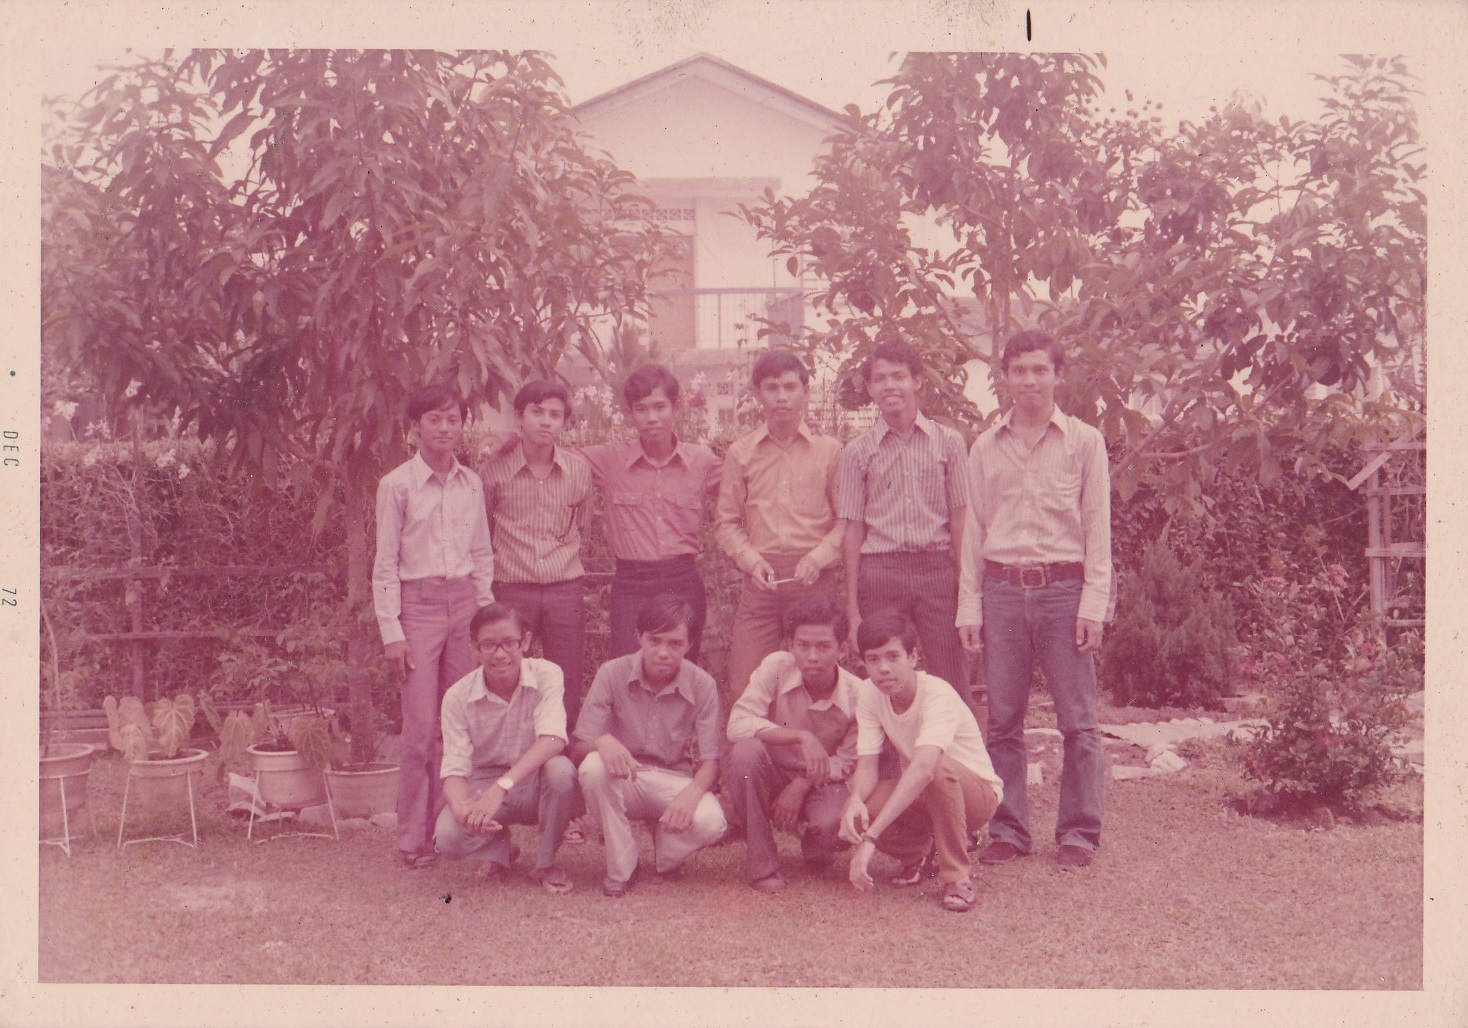 1971 Kampung Bahru BERDIRI Mokhtar, Khairuddin, x ingat, Rahman, x ingat, mior rosli DUDUK megat shamsuddin, x ingat , x ingat, syed mohd anuar